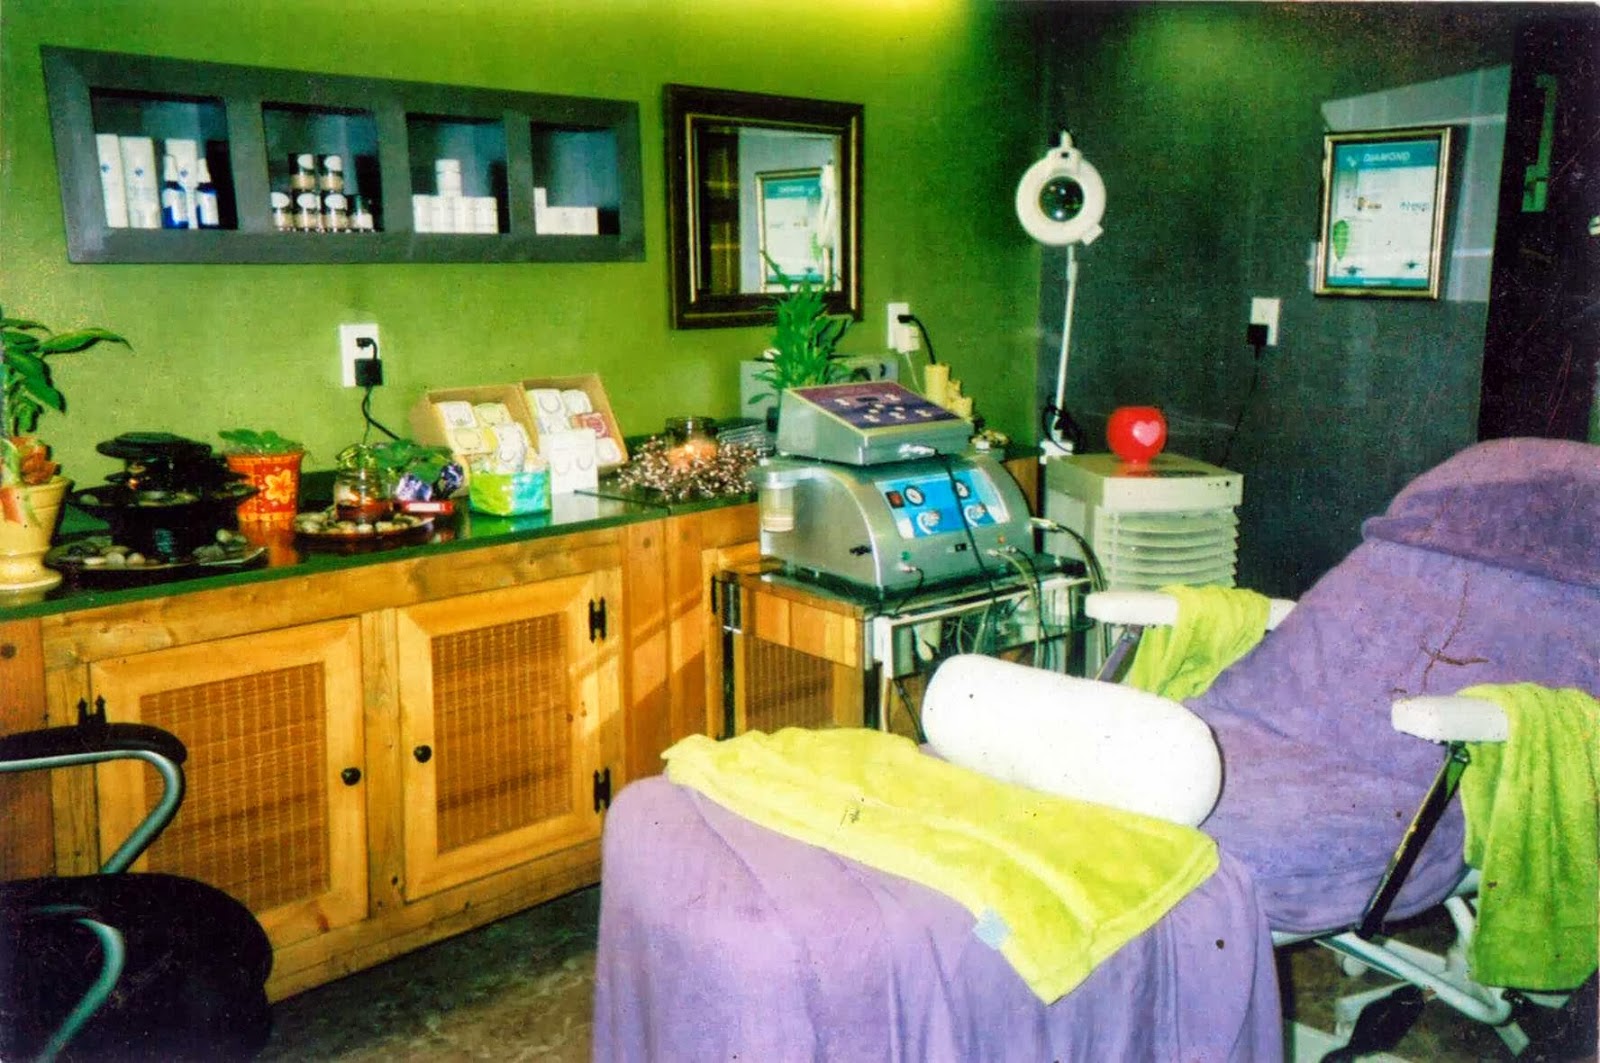 Photo of Carol Esthetics in Port Washington City, New York, United States - 1 Picture of Point of interest, Establishment, Health, Spa, Beauty salon, Hair care